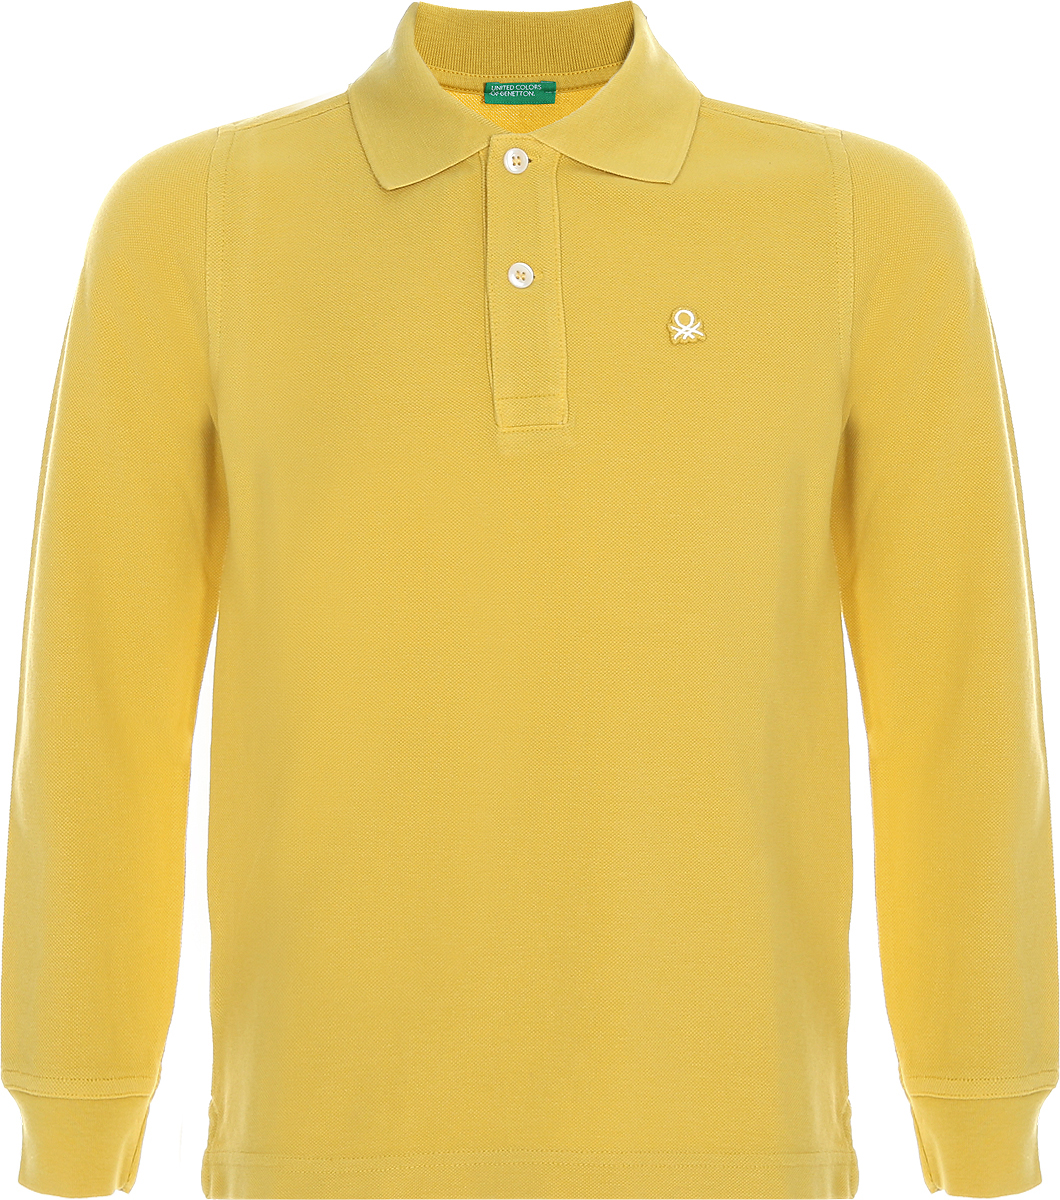 Кофта для мальчика United Colors of Benetton, цвет: желтый. 3089C3090_36H. Размер 120